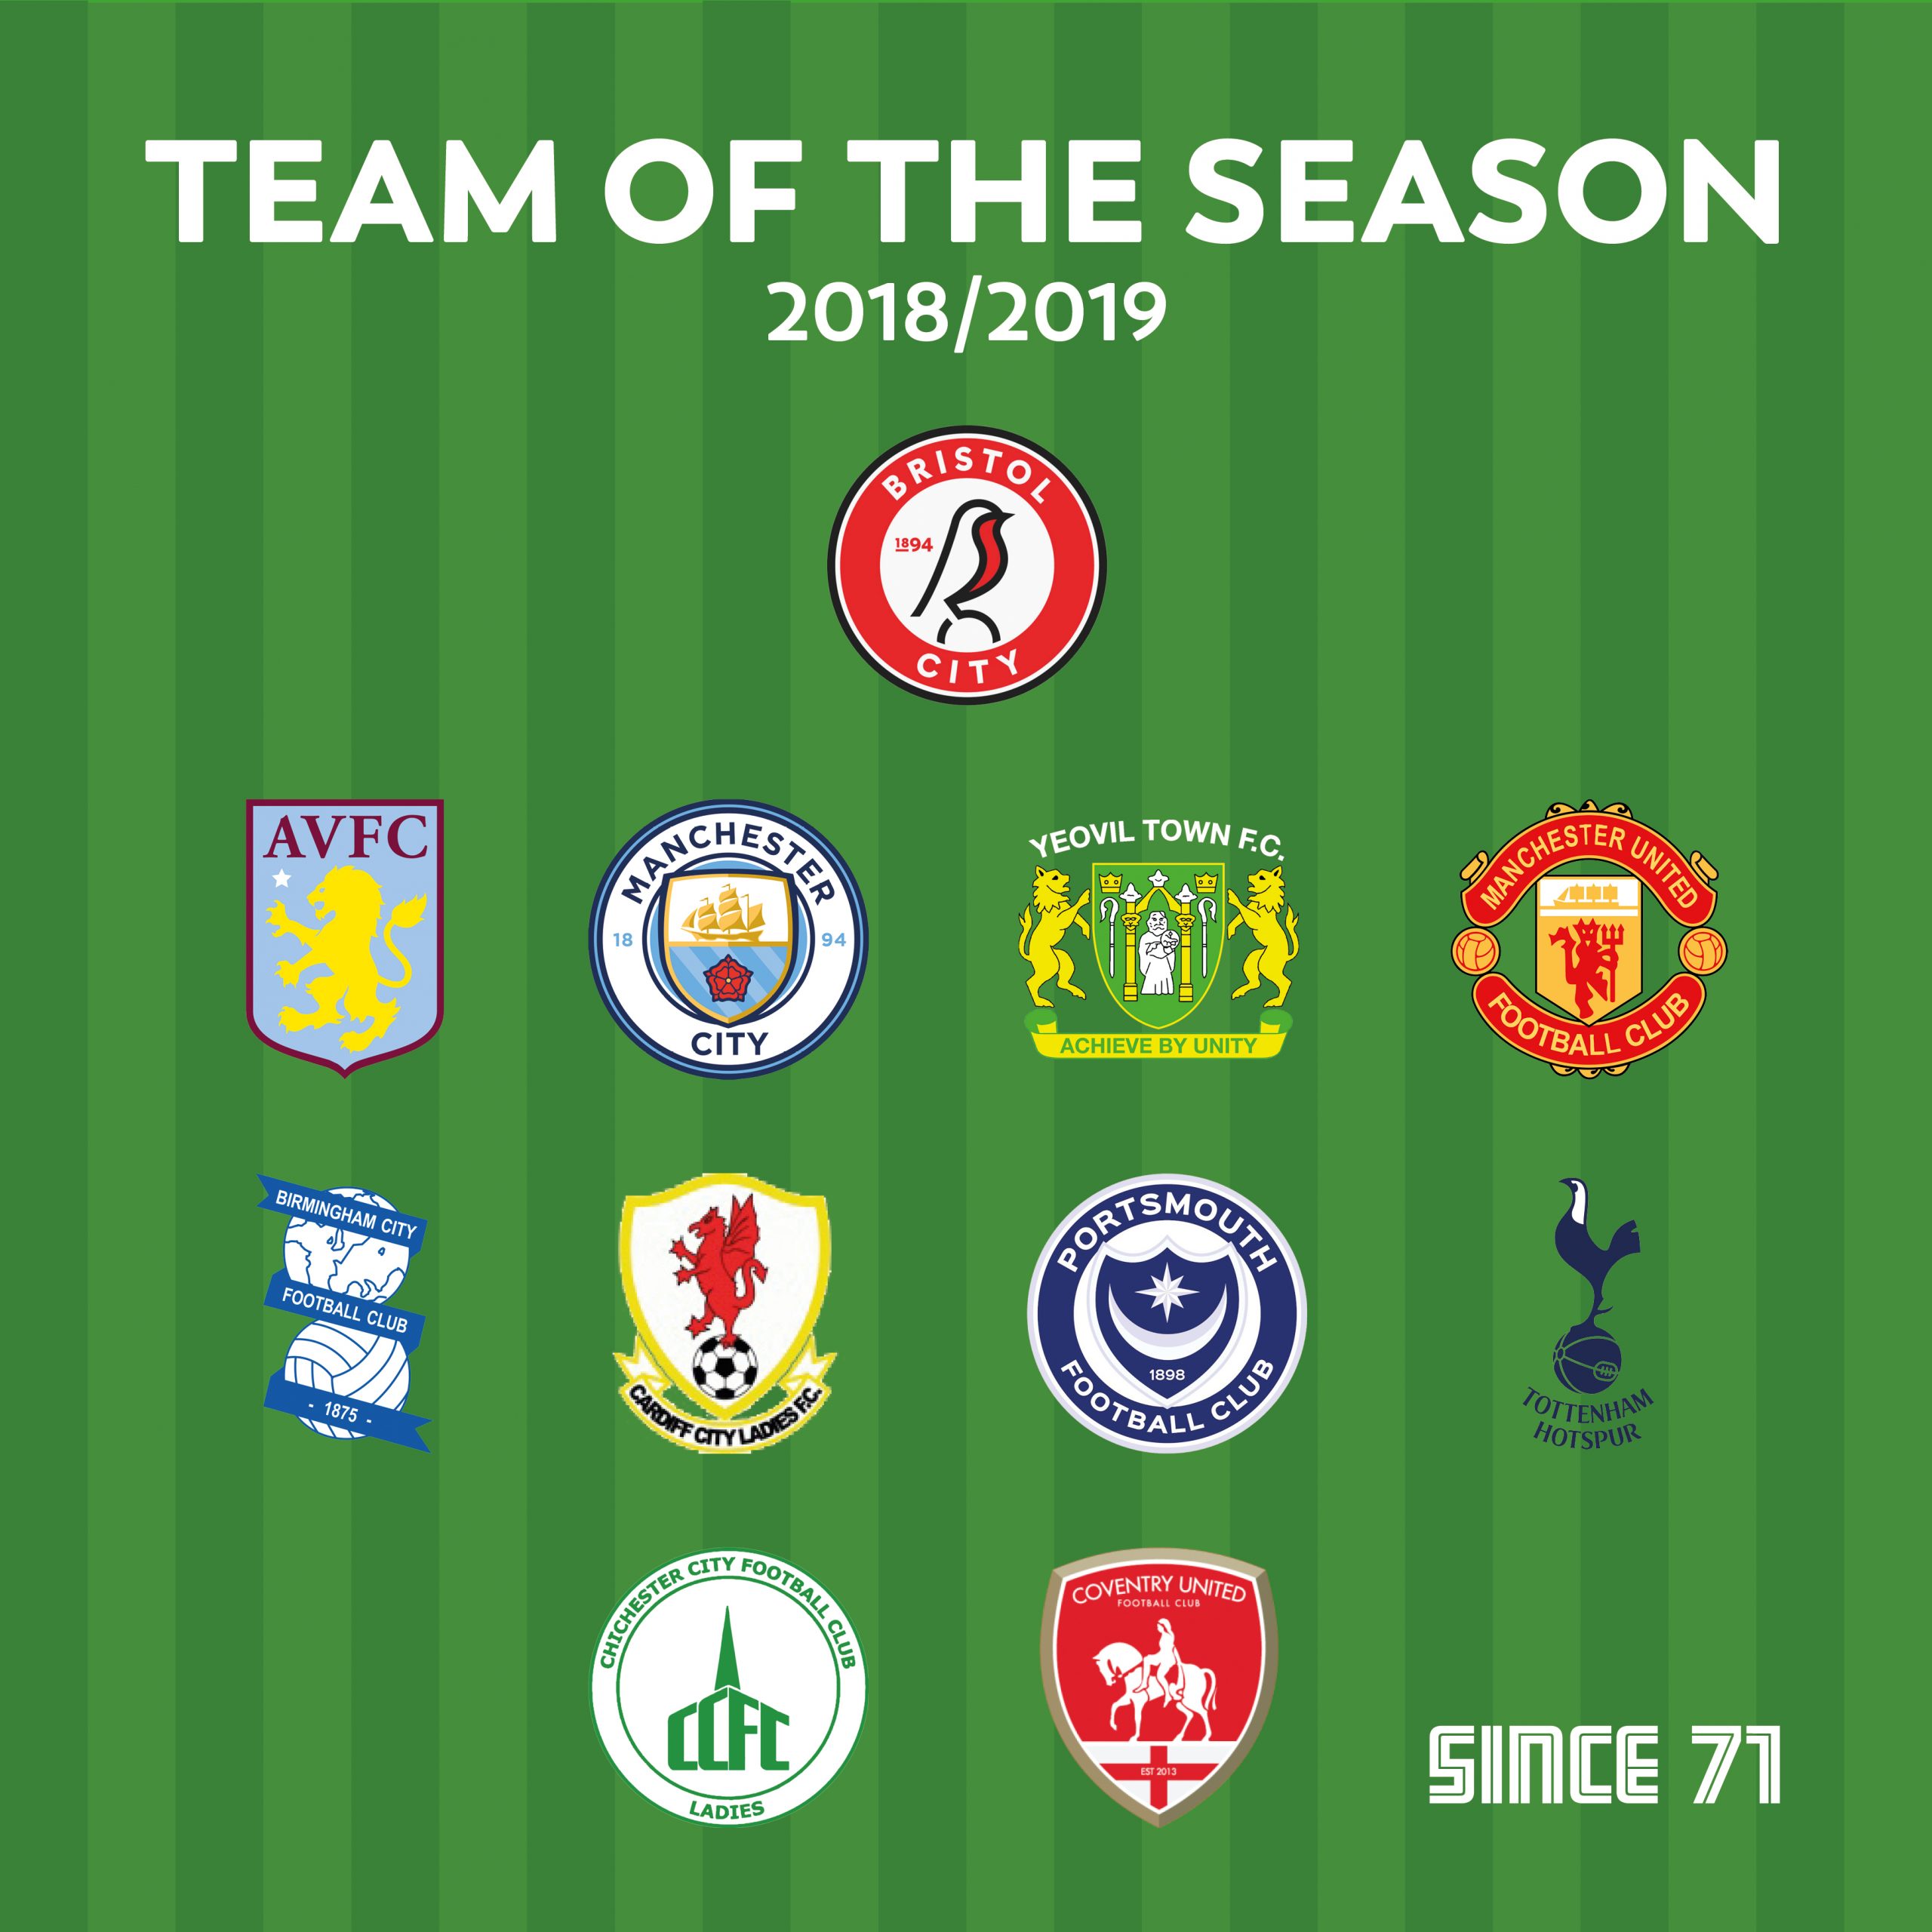 Since 71 Team of the Season